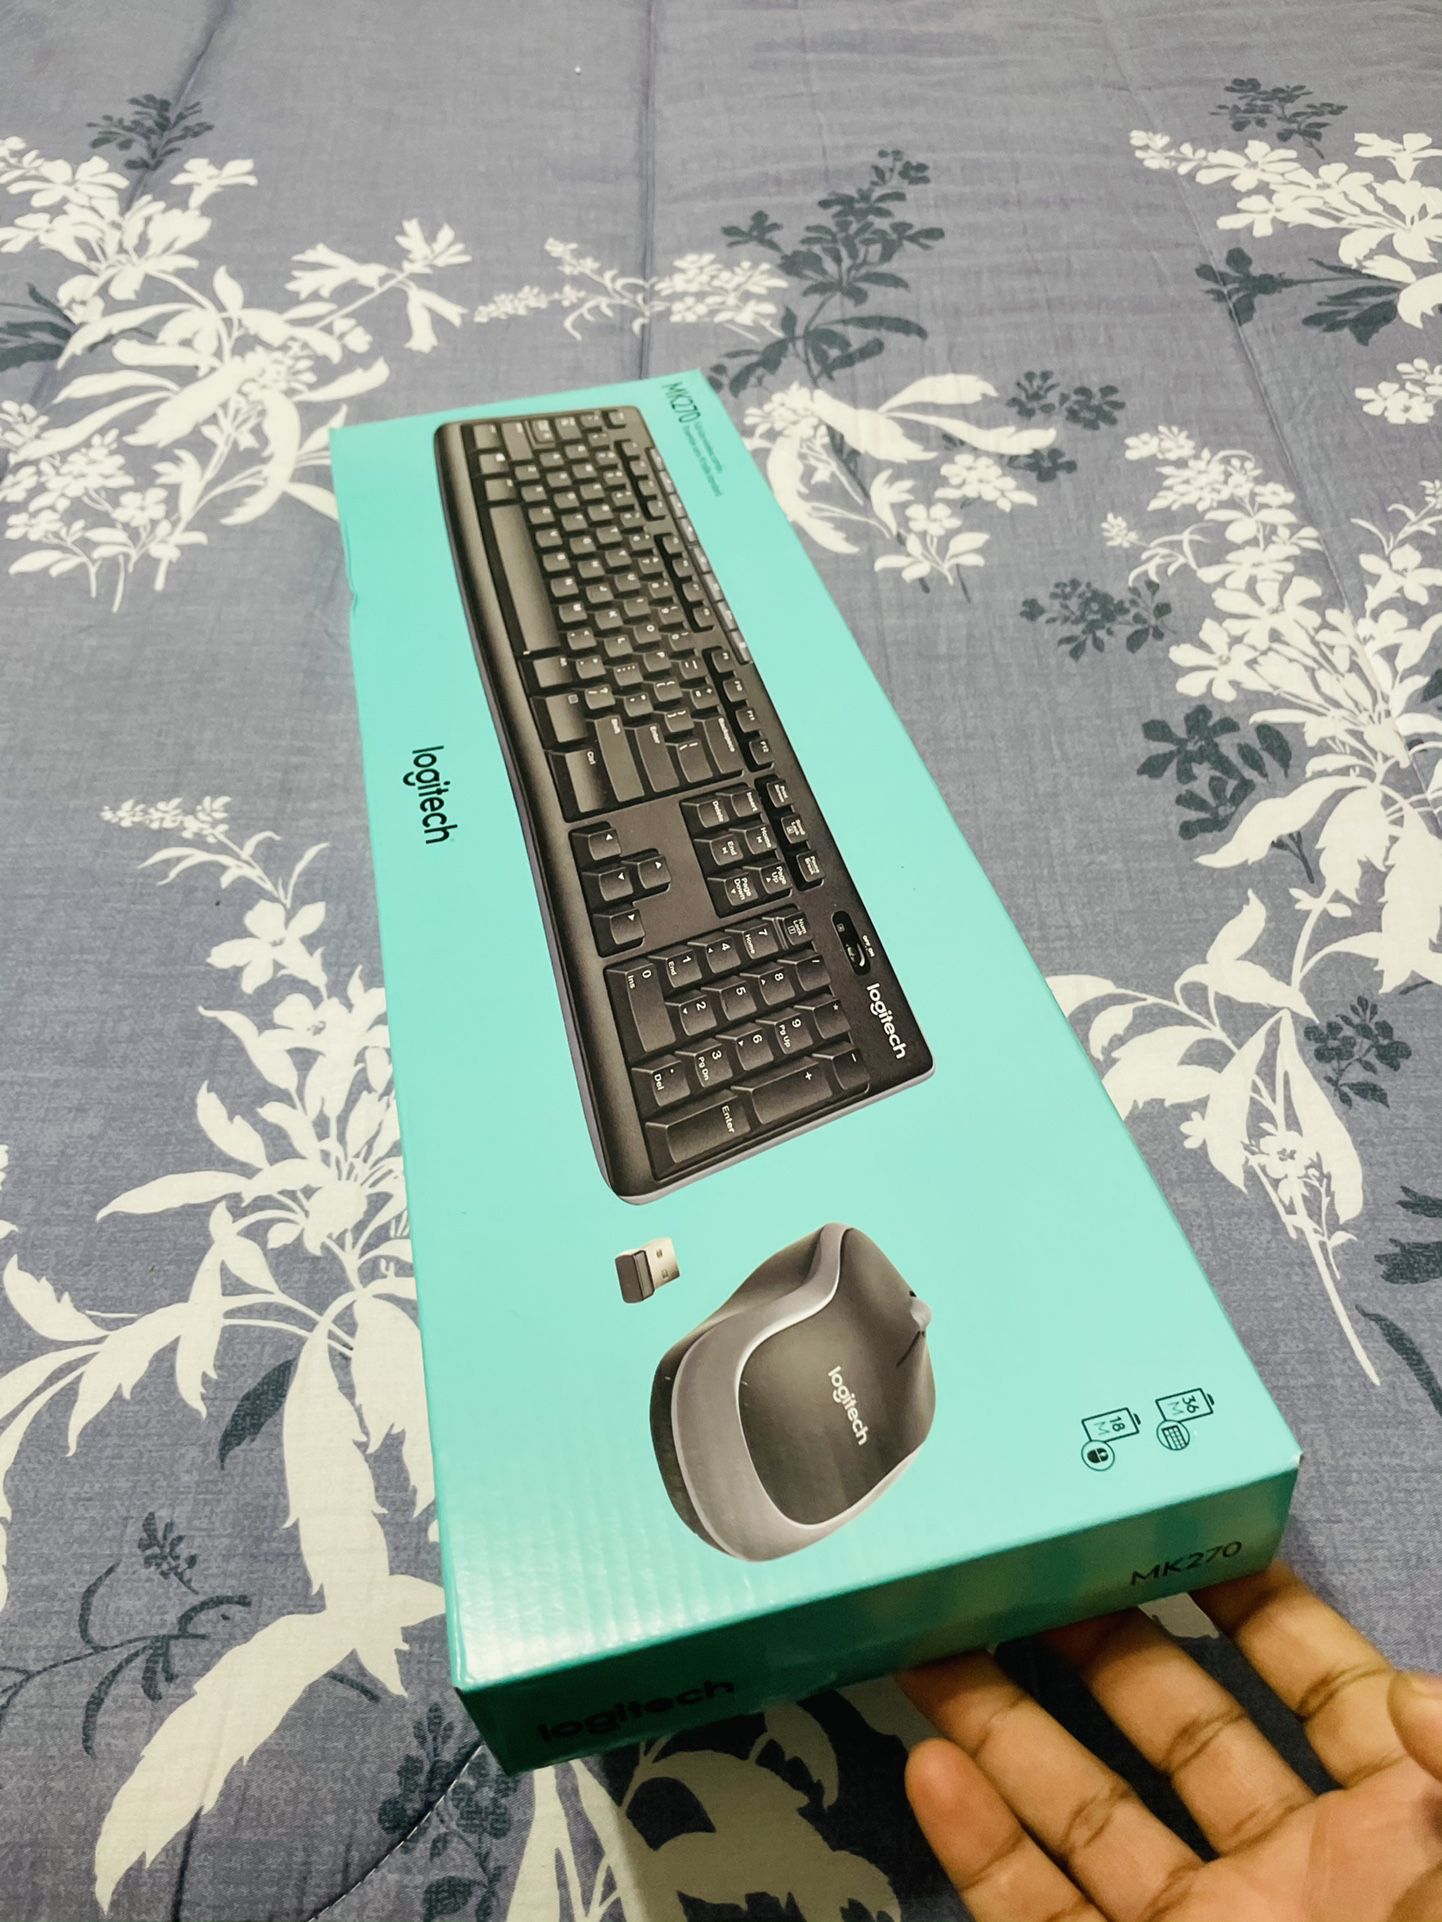 MK270 Logitech Wireless keyboard mouse - Brand New